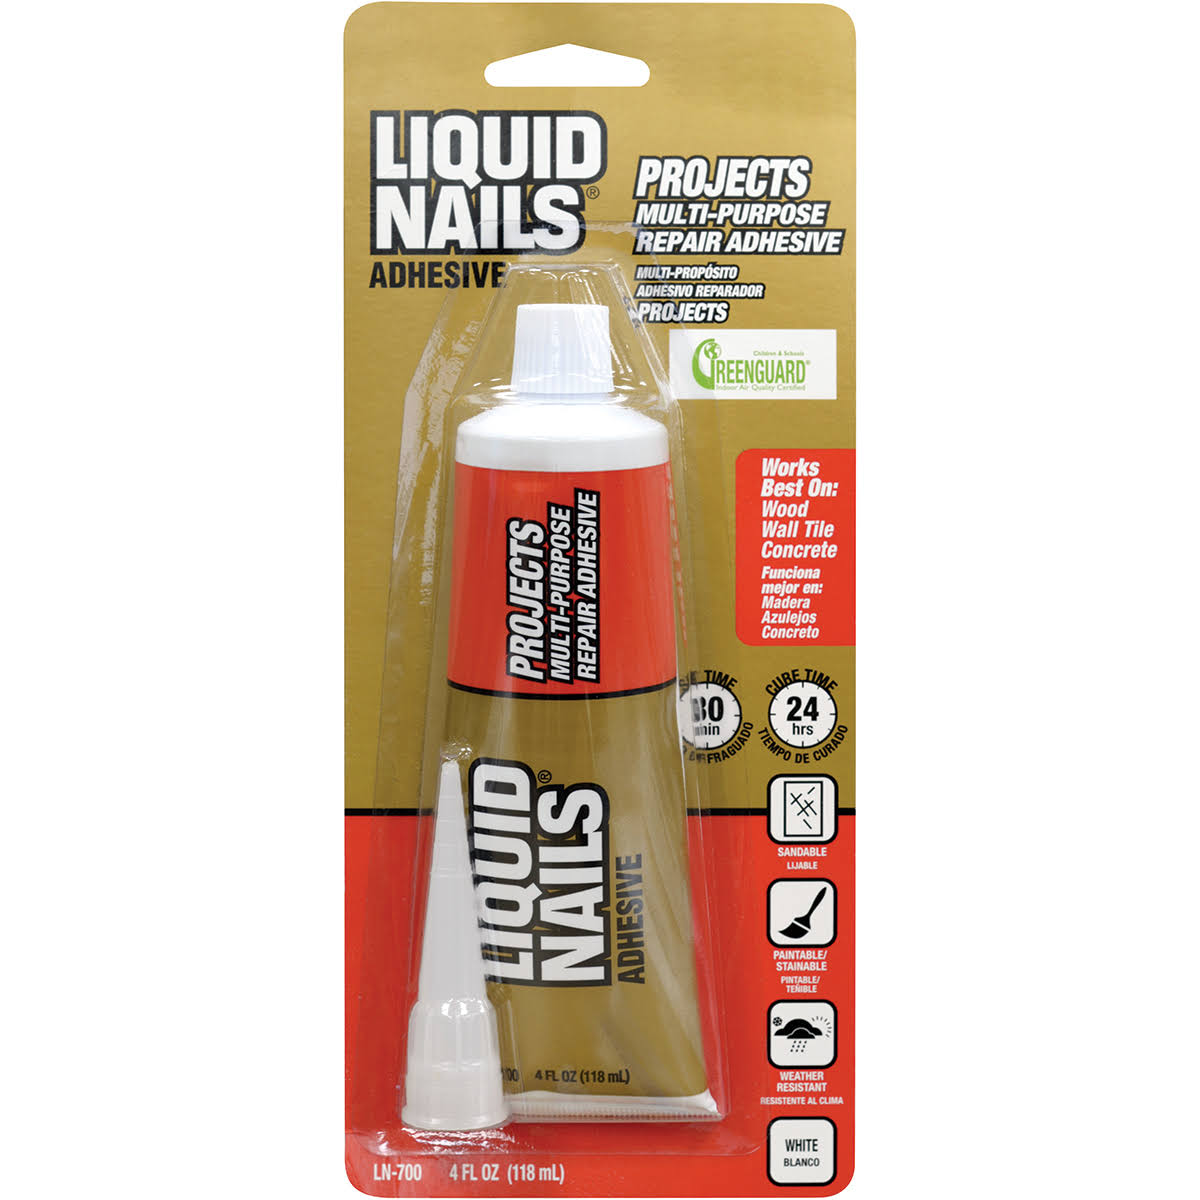 Liquid Nails Small Projects Adhesive